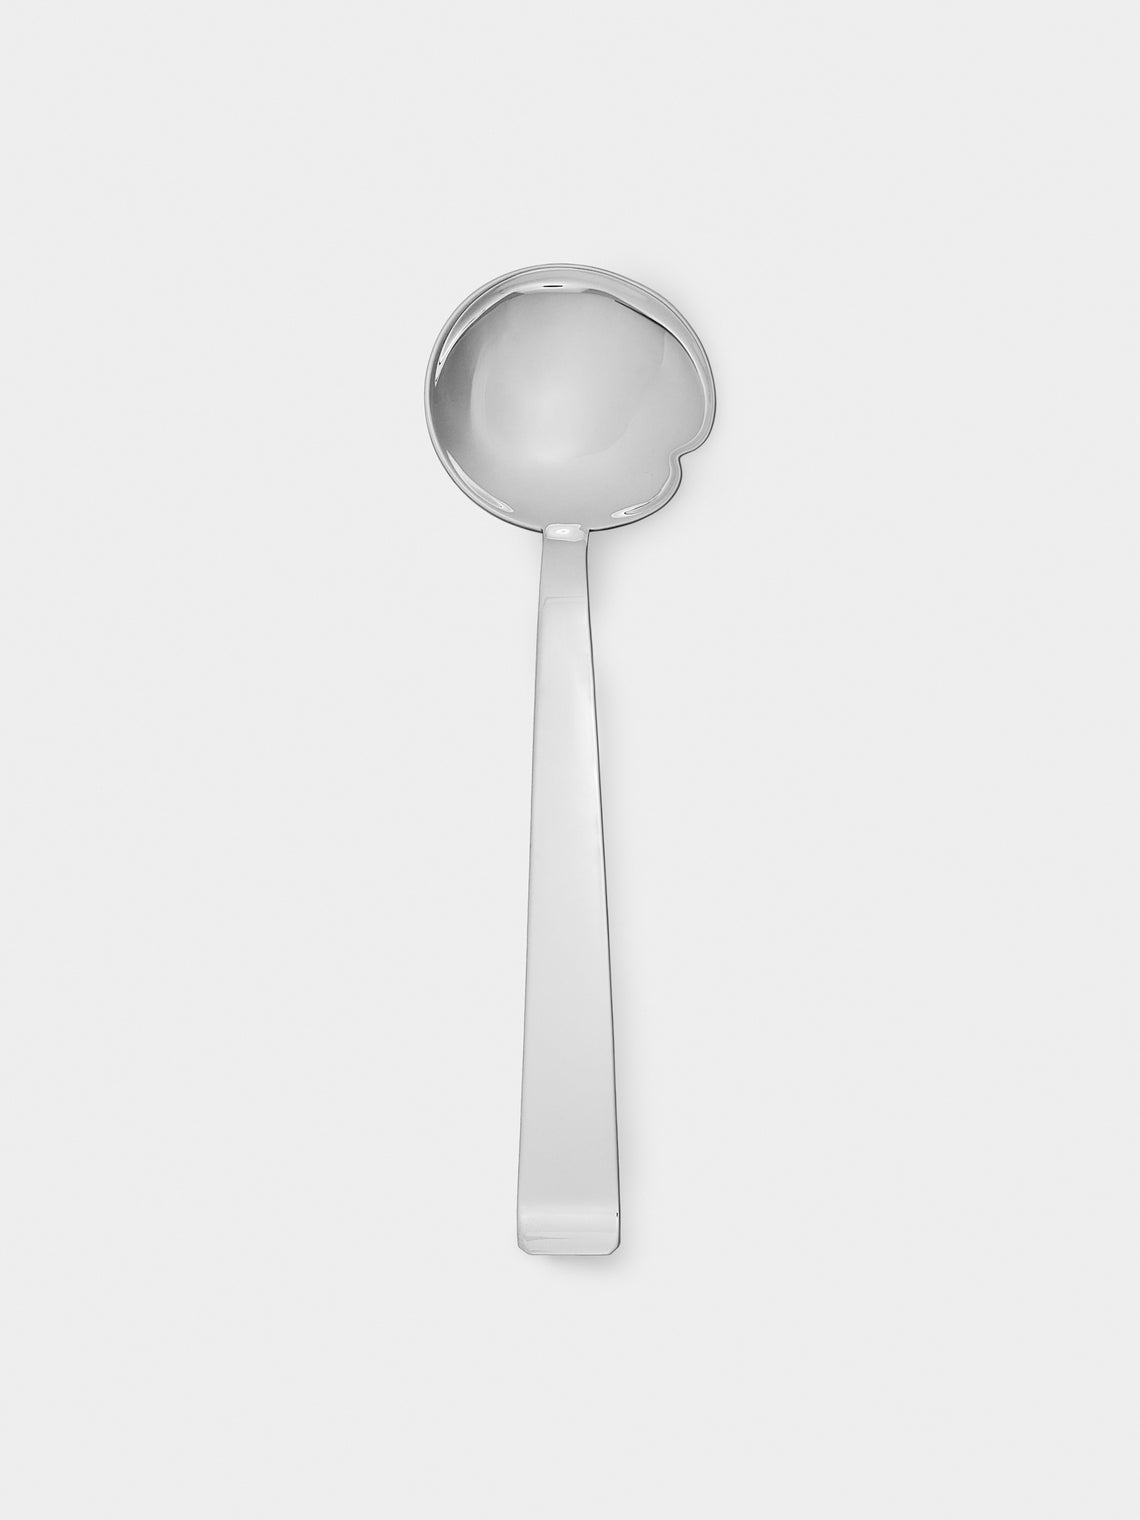 Wiener Silber Manufactur - Josef Hoffmann 135 Silver-Plated Cutlery - Silver - ABASK